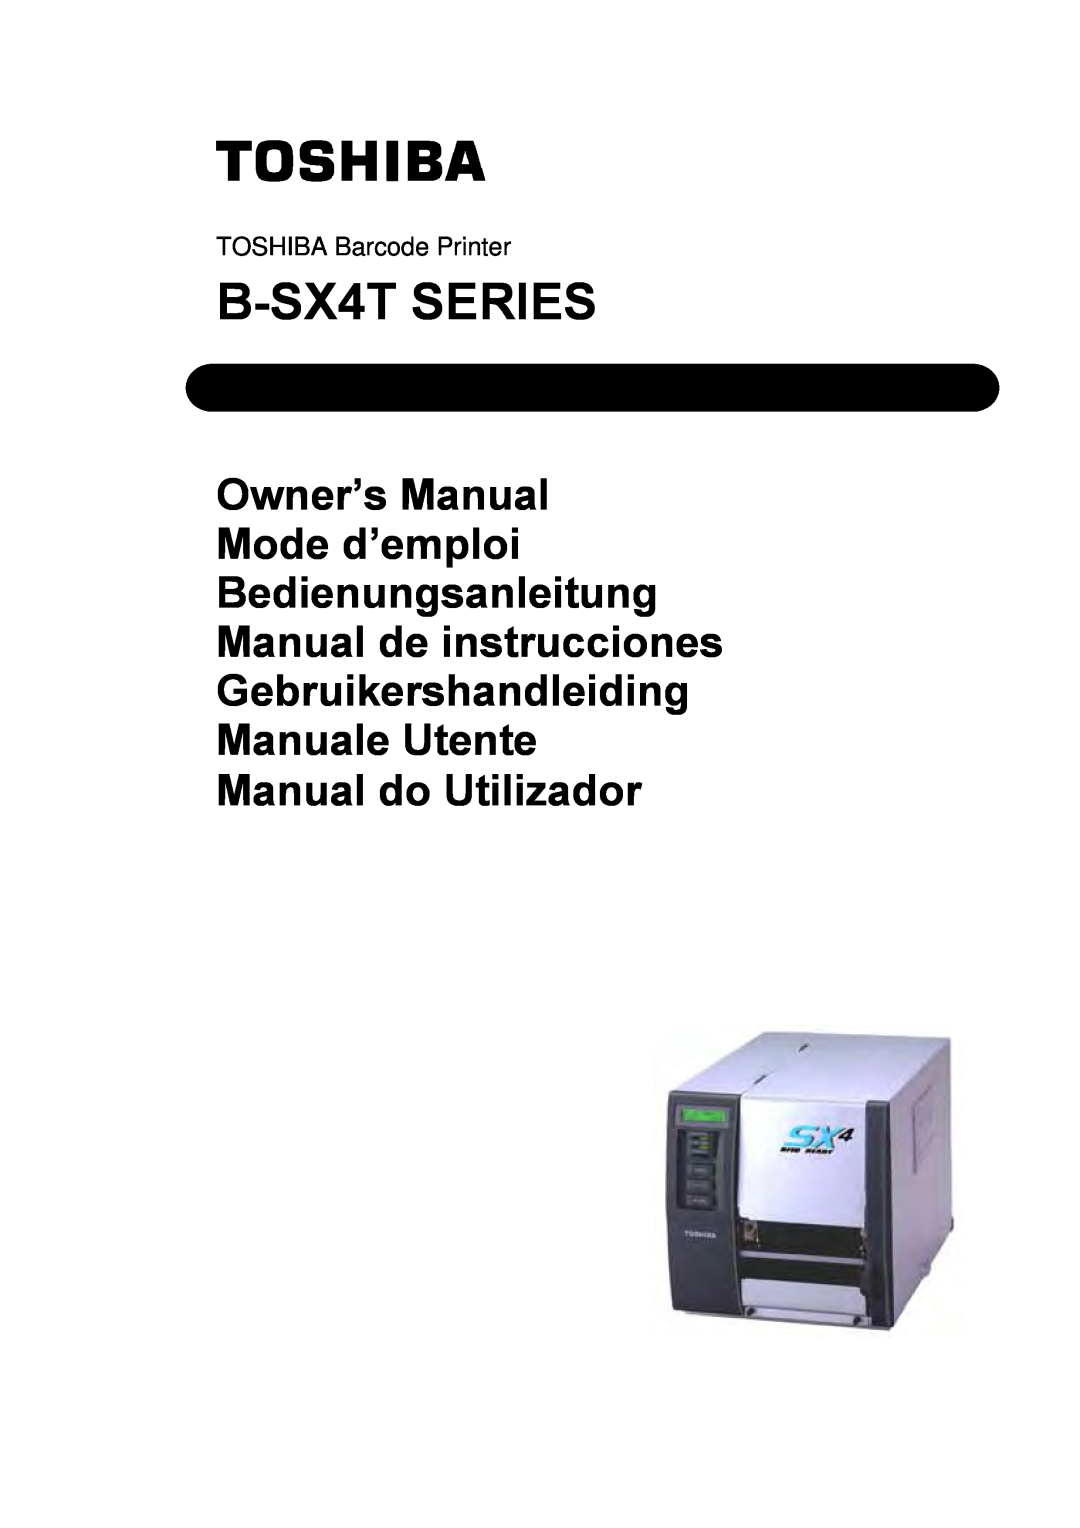 Toshiba owner manual B-SX4T SERIES, TOSHIBA Barcode Printer 